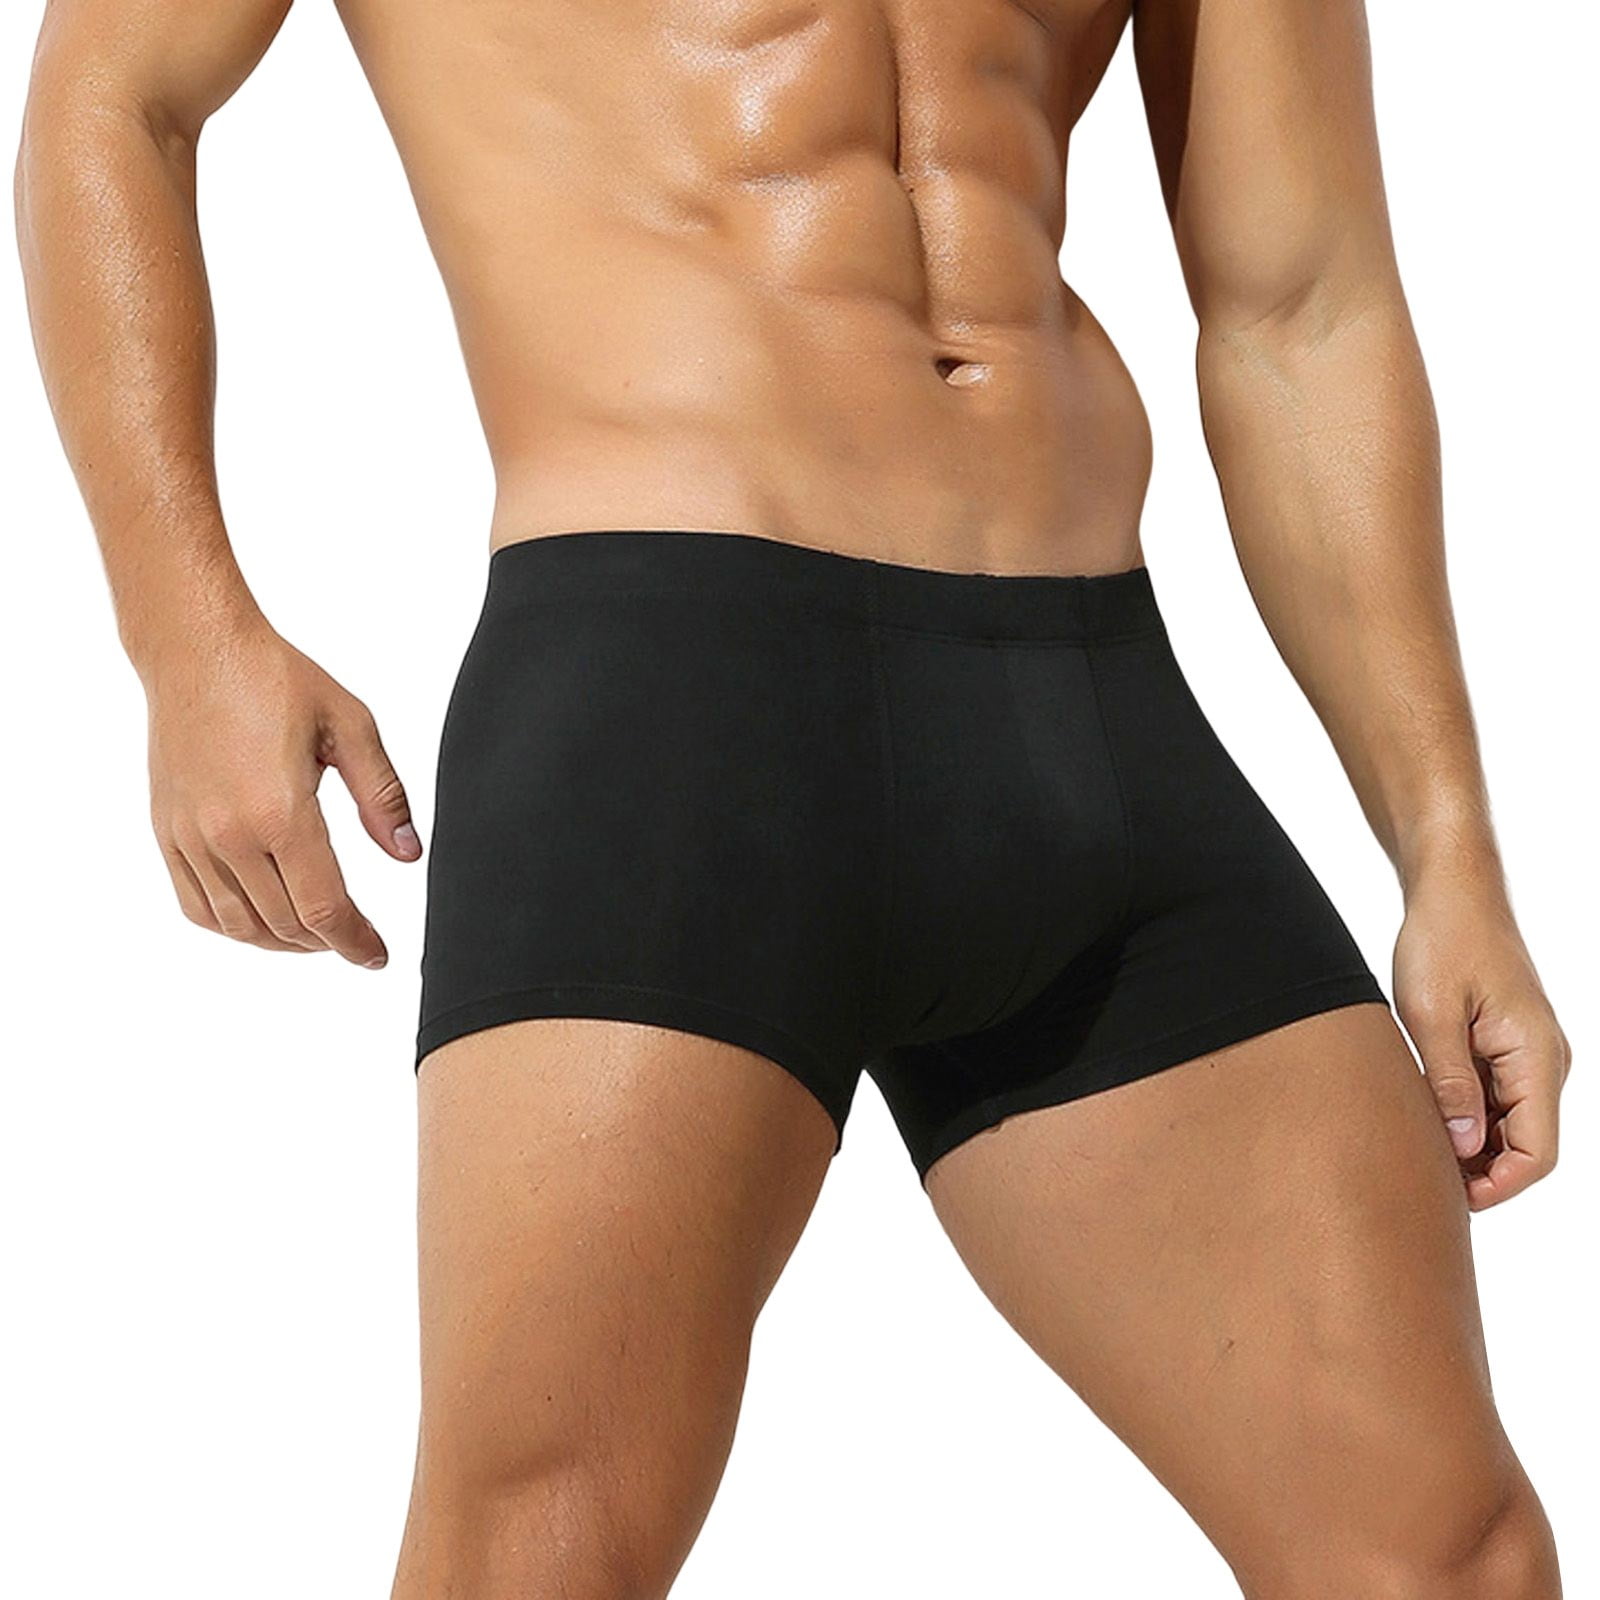 KaLI_store Men Boxers Men's Underwear Boxer Briefs Pack, Cotton ComfortSoft  Boxer Brief for Men, Moisture-Wicking Breathable Red,XL 